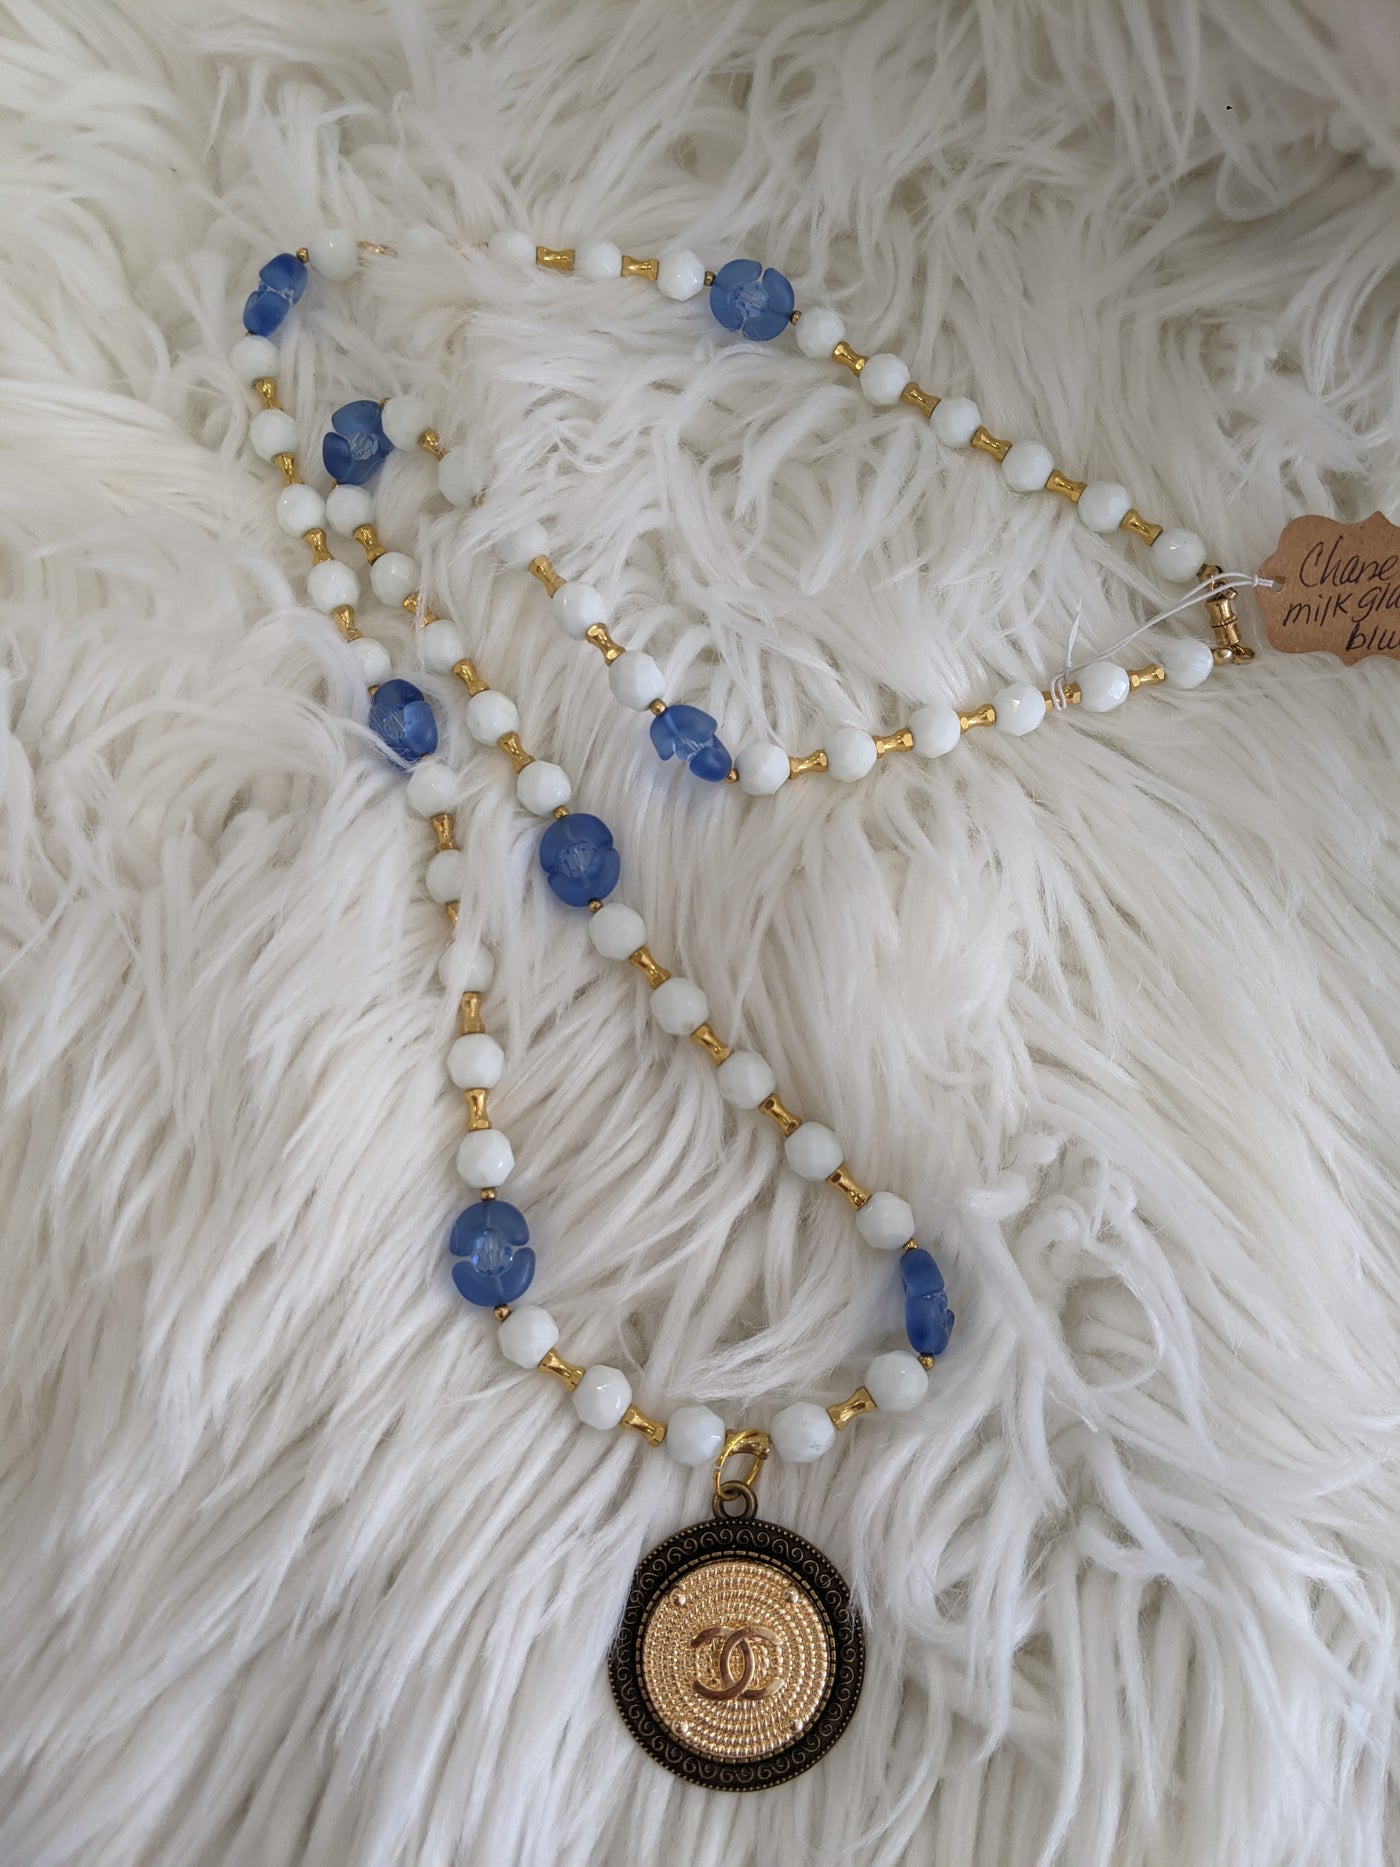 TS101 - Chanel Milk Glass & Blue Glass Beads (1950's)